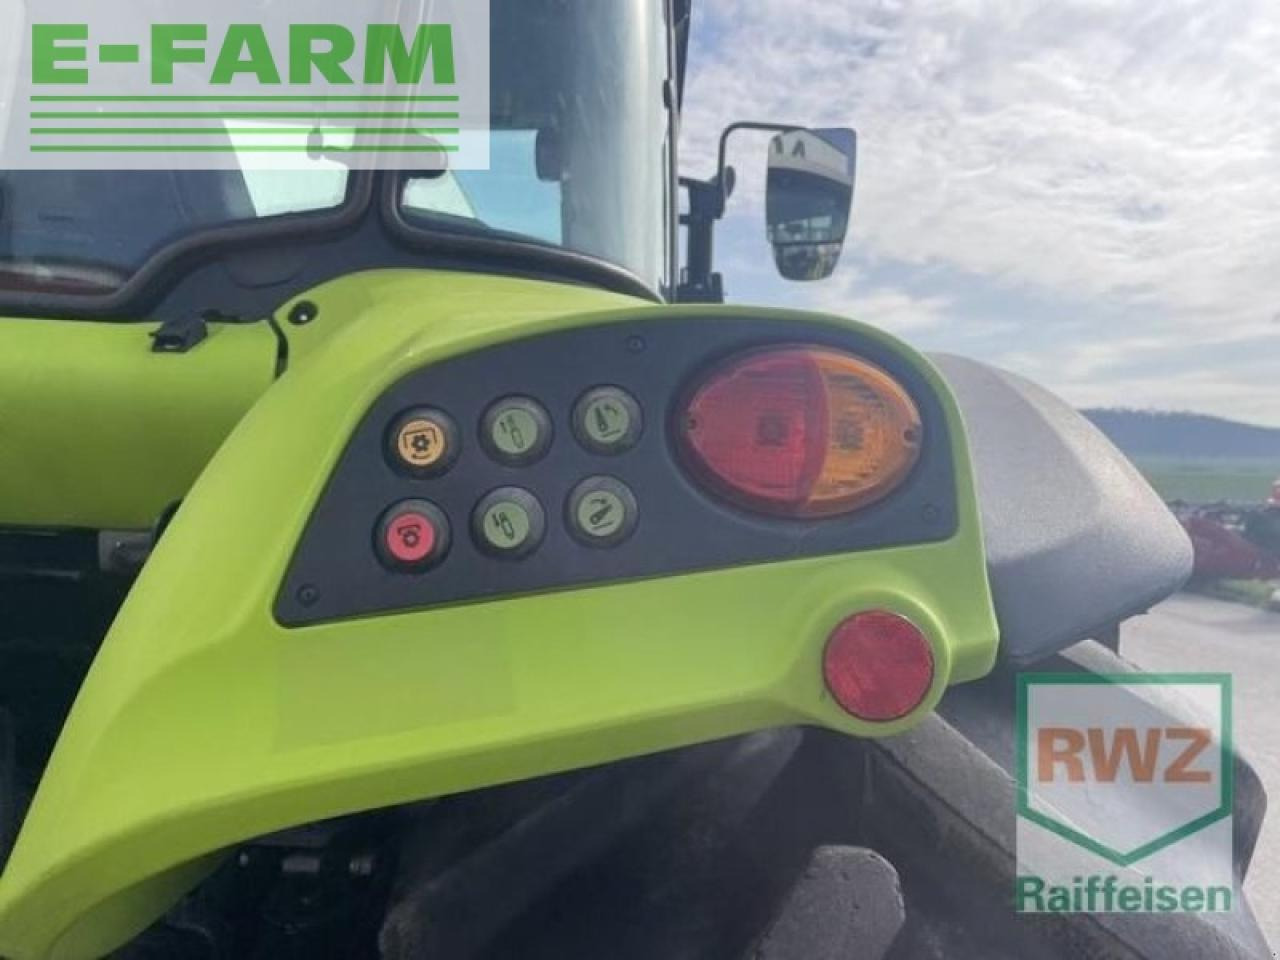 Farm tractor CLAAS arion 450